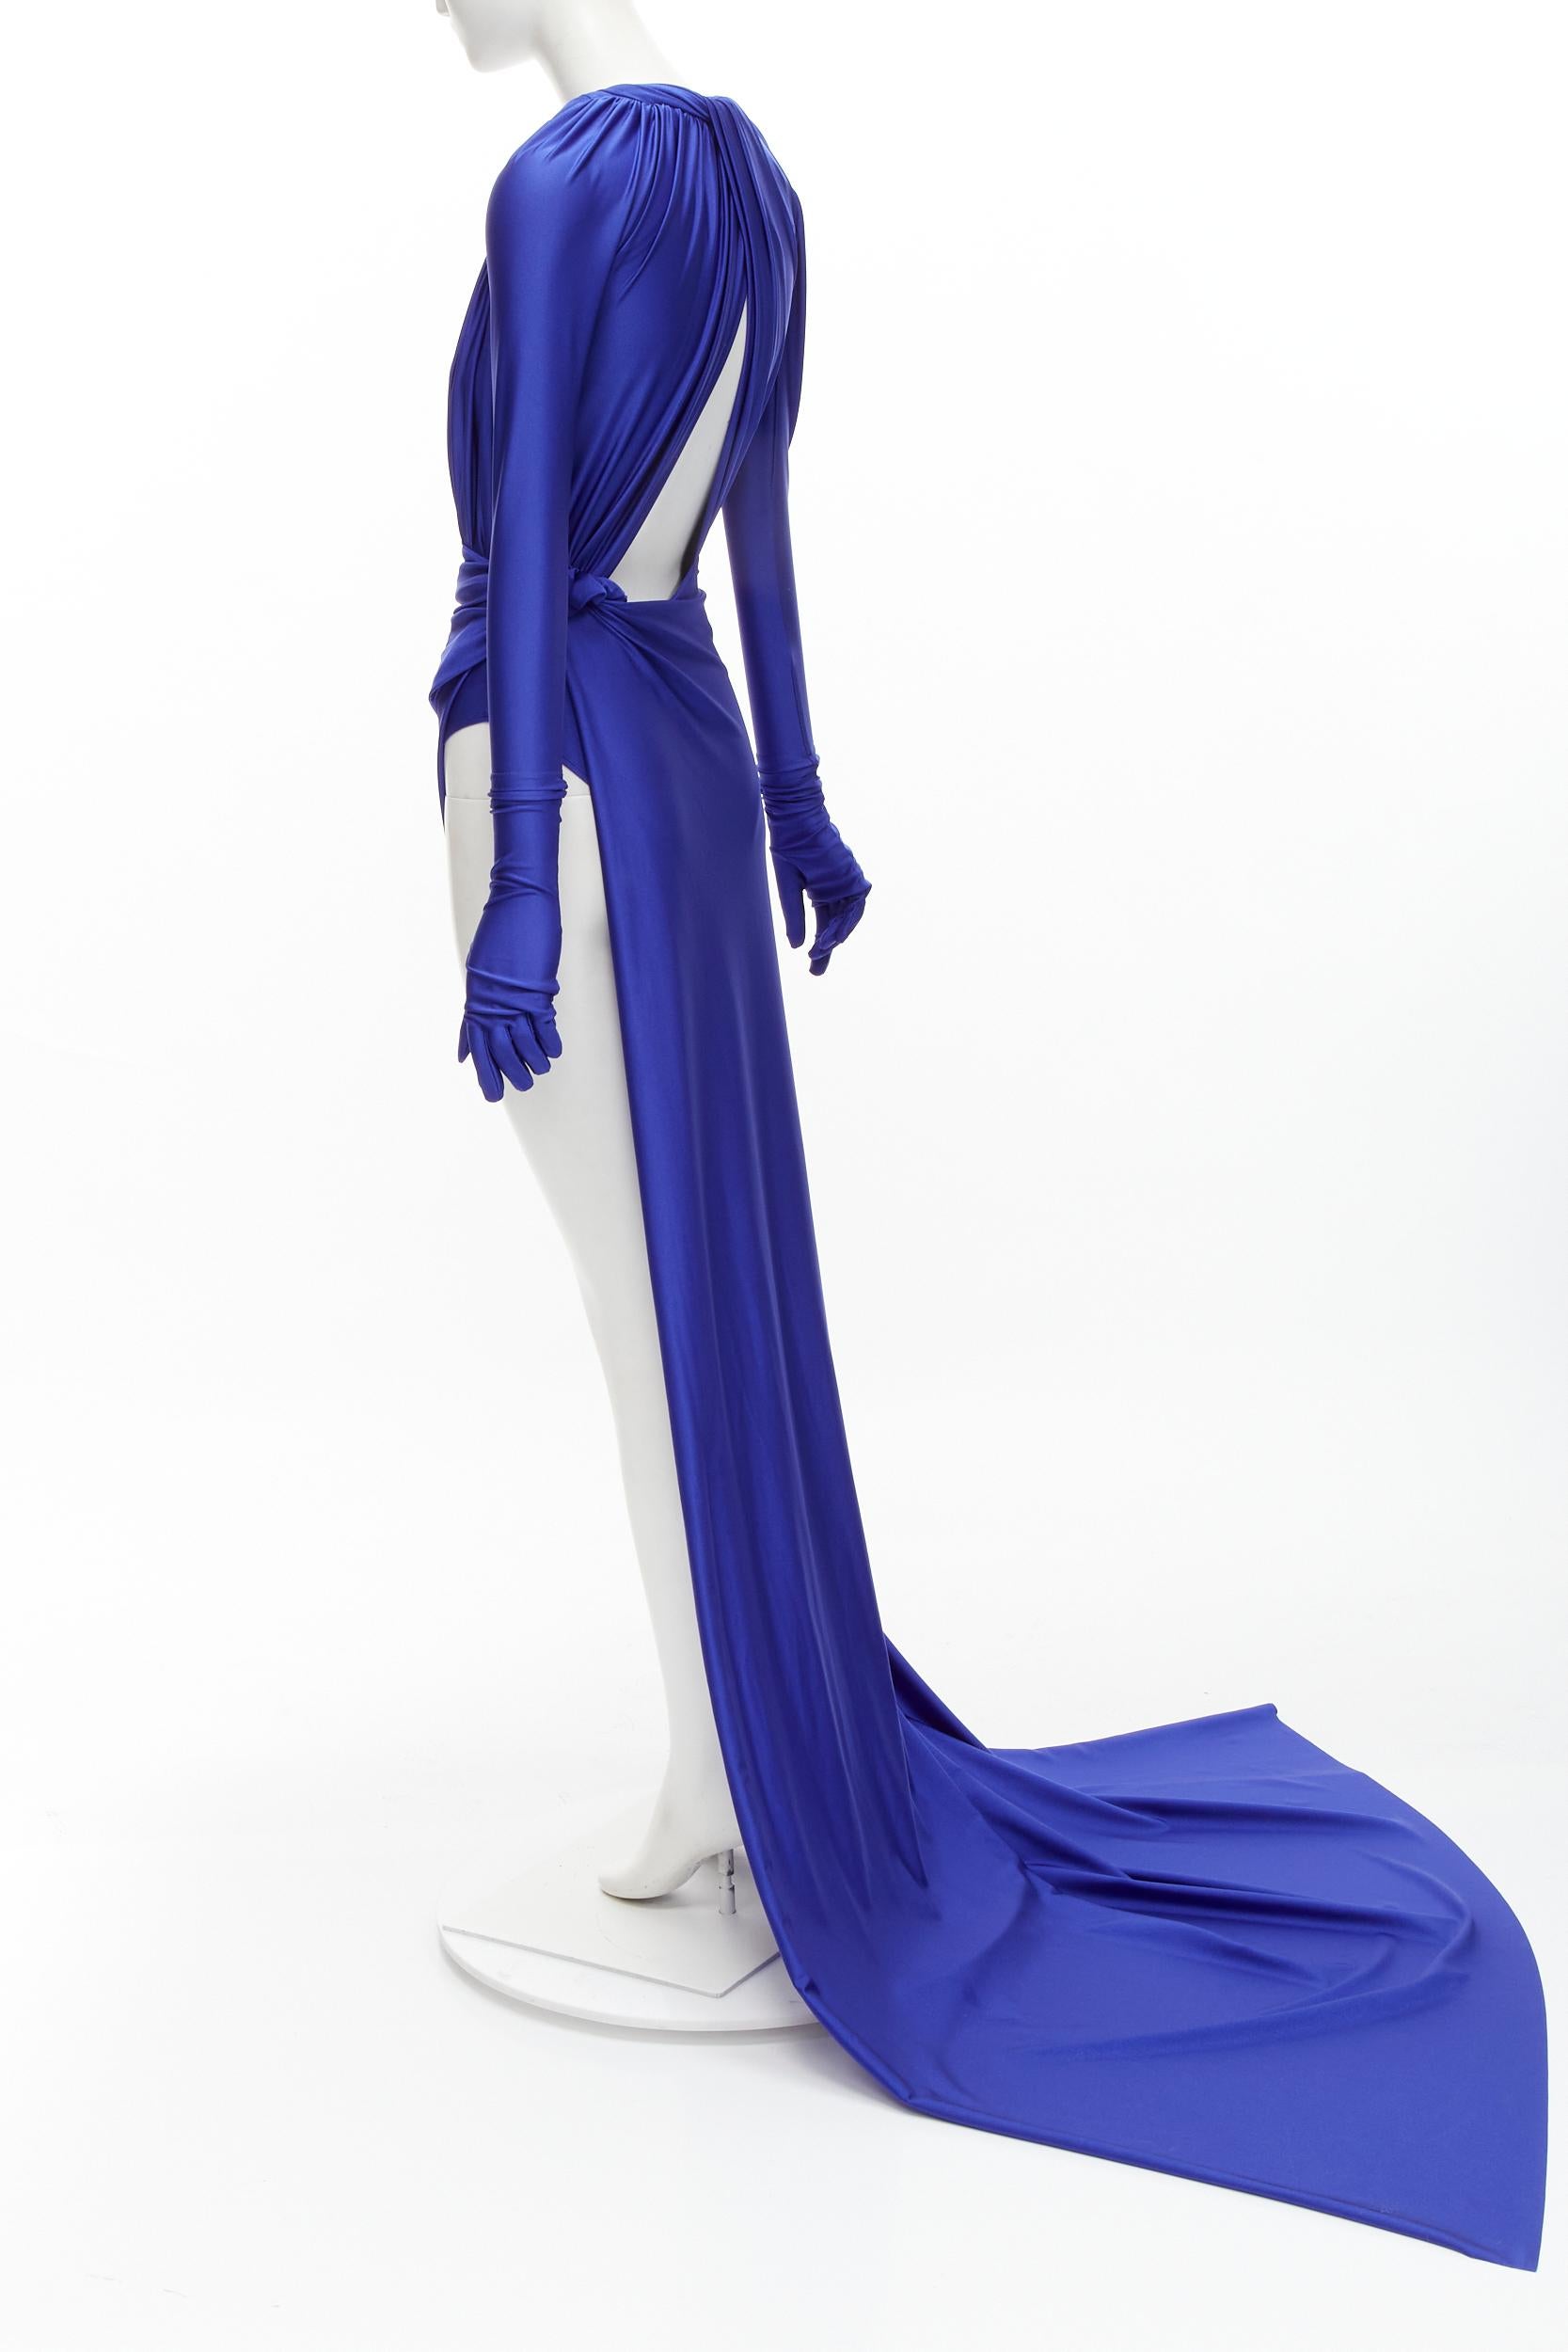 BALENCIAGA 2020 Demna Kim Kardashian cobalt blue gown with gloves FR36 S 1